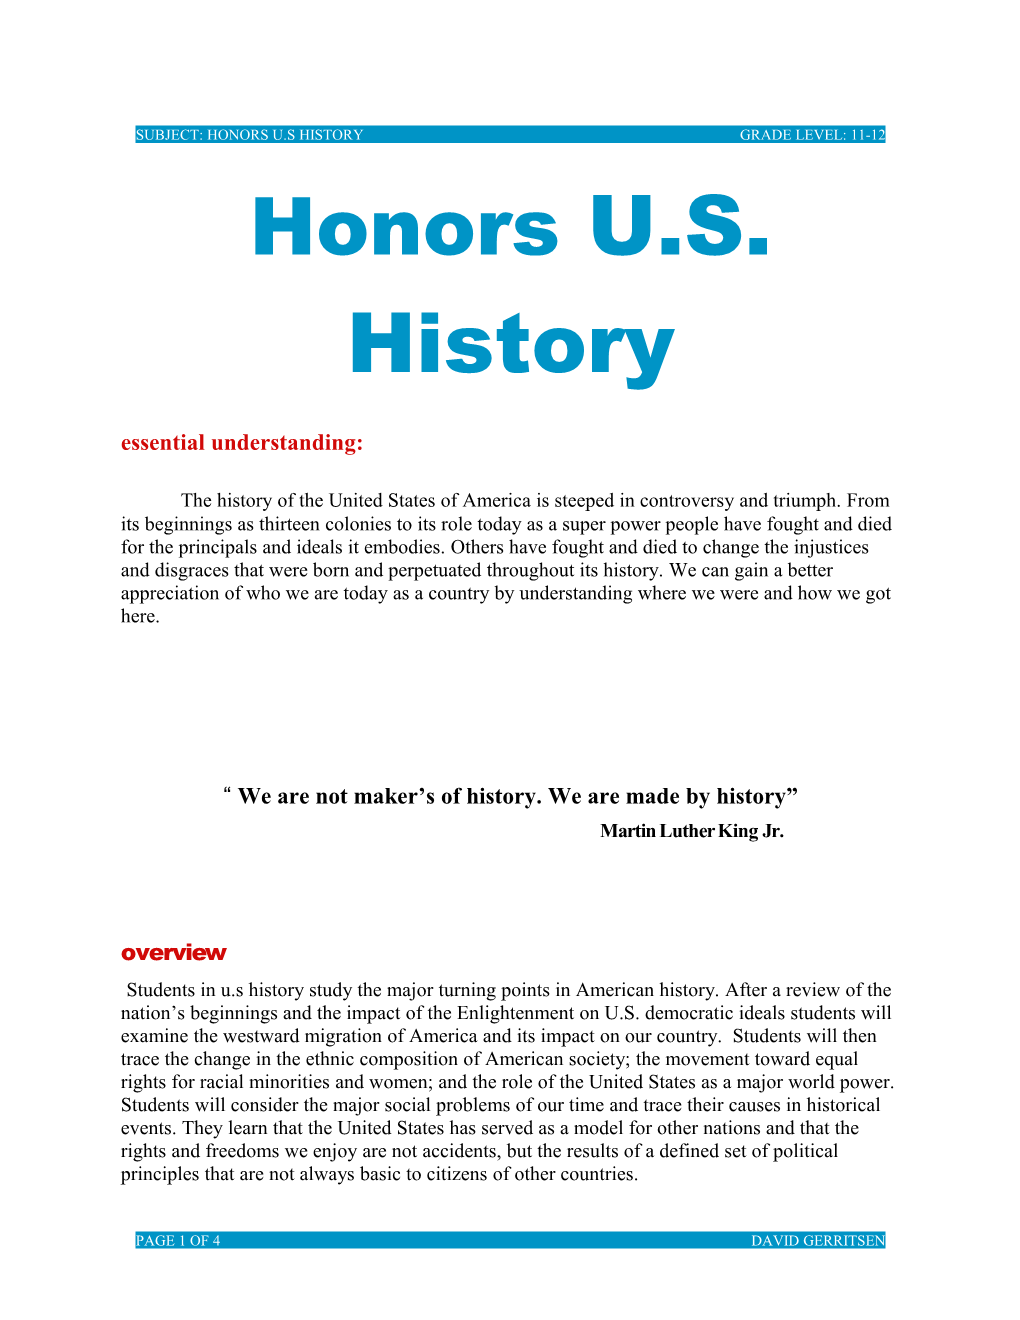 Subject: Honors U.S History Grade Level: 11-12